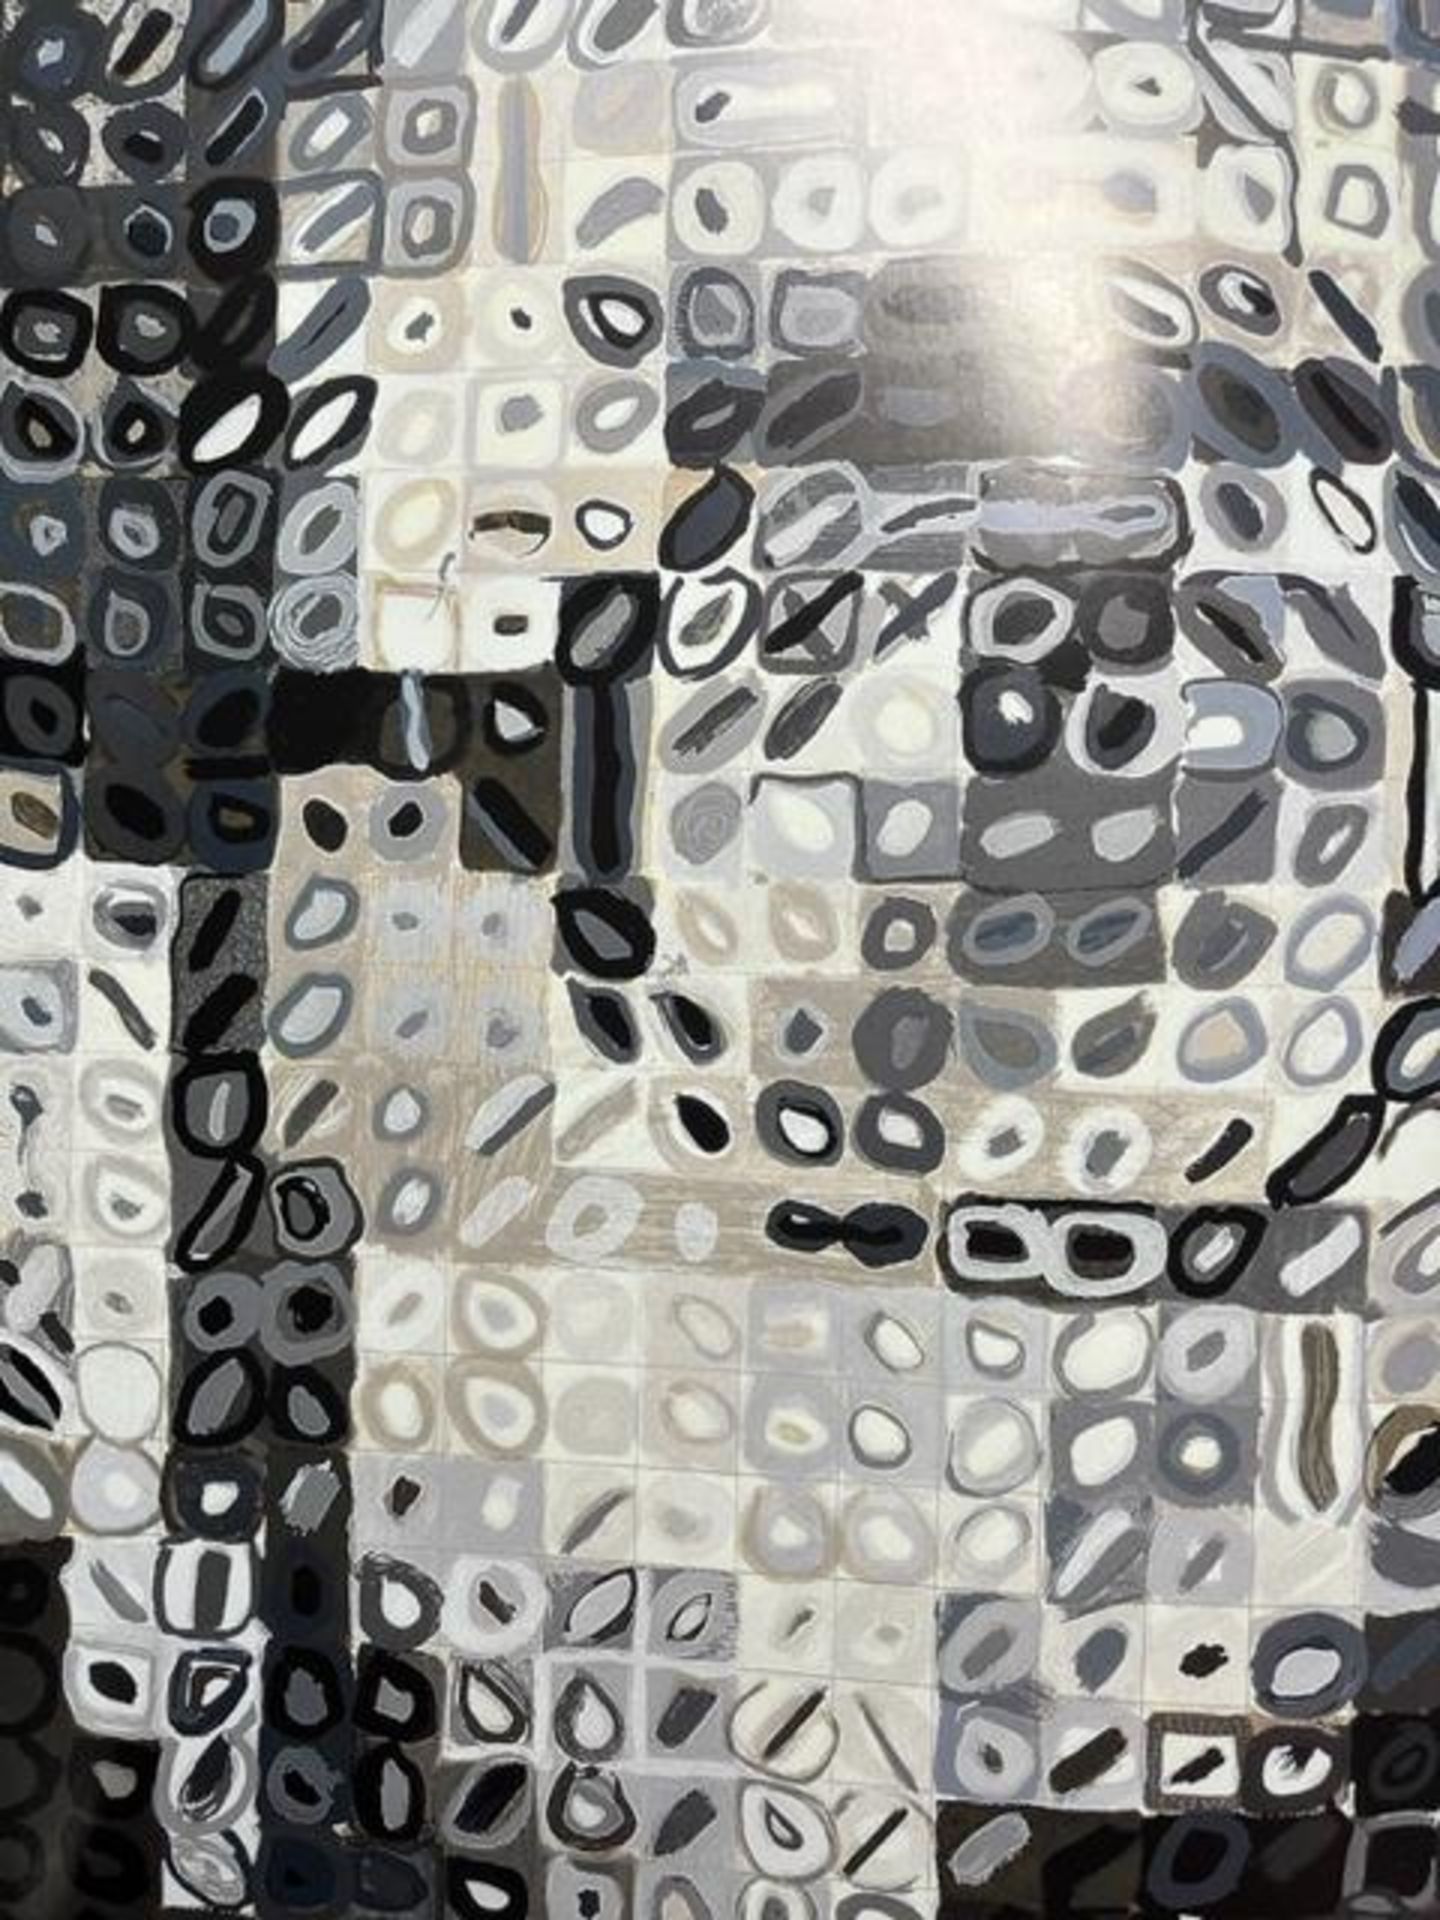 Chuck Close "Untitled" Print. - Image 2 of 6